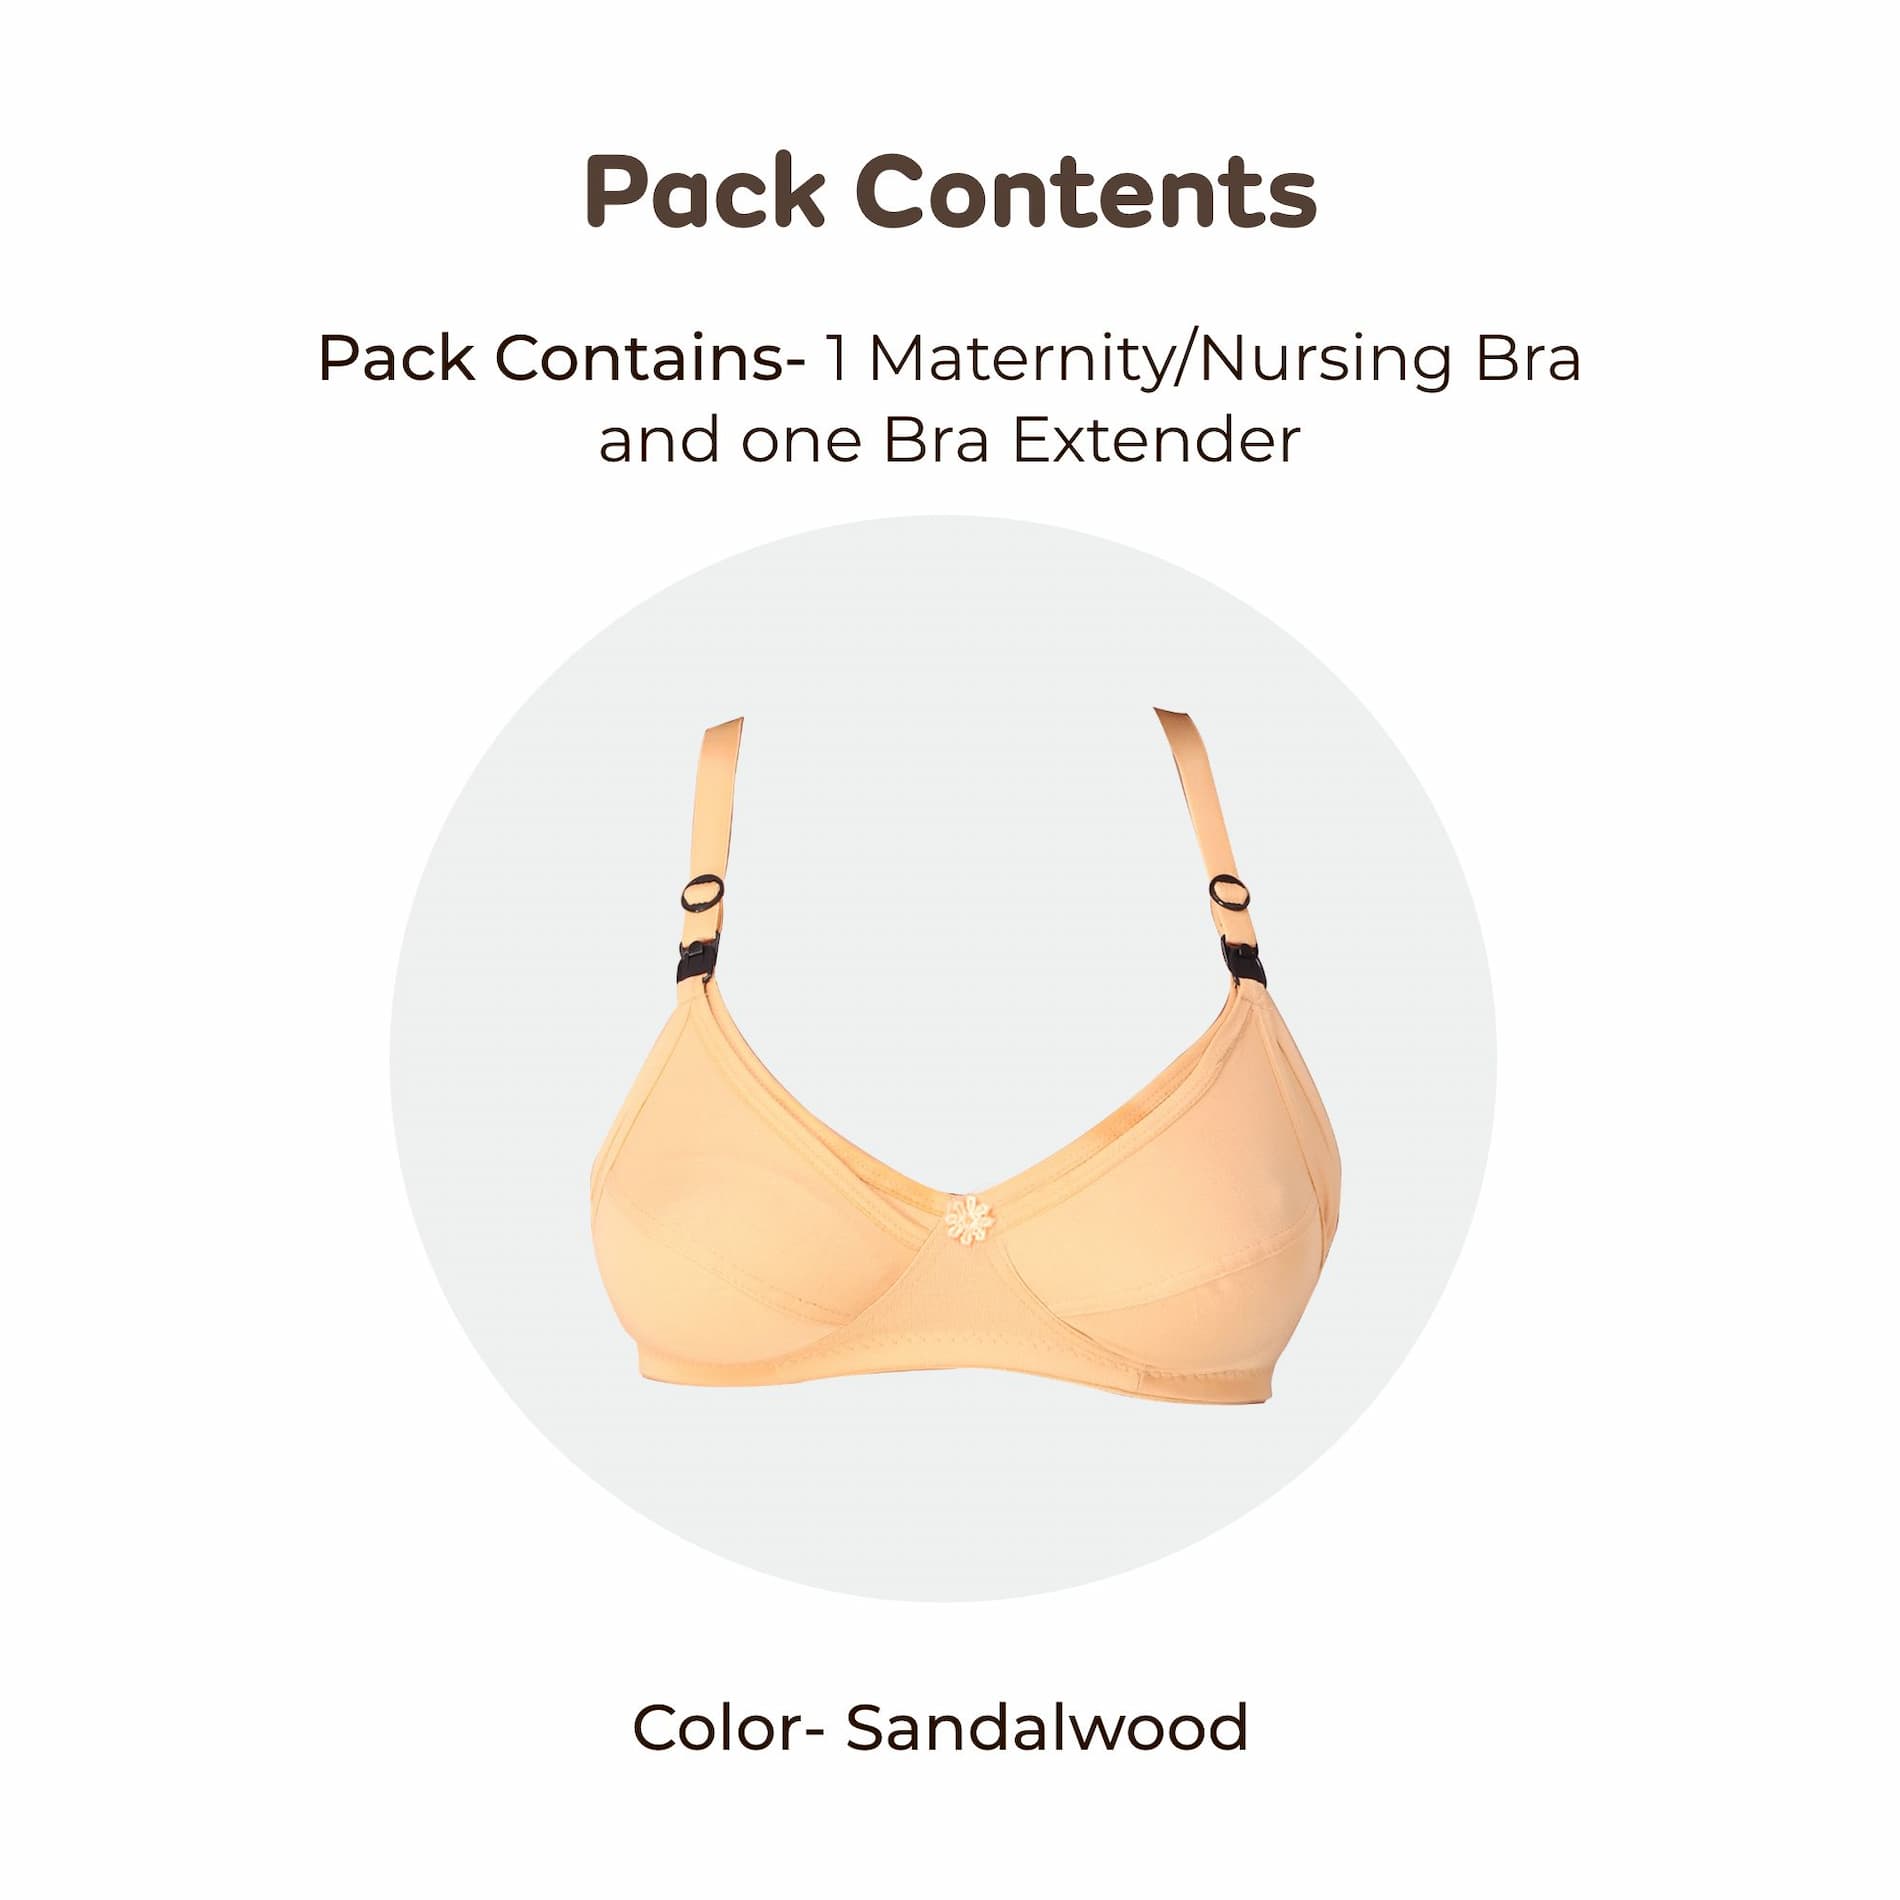 Mylo Maternity/Nursing Bras Non-Wired, Non-Padded with free Bra Extender - Sandalwood 36 B 